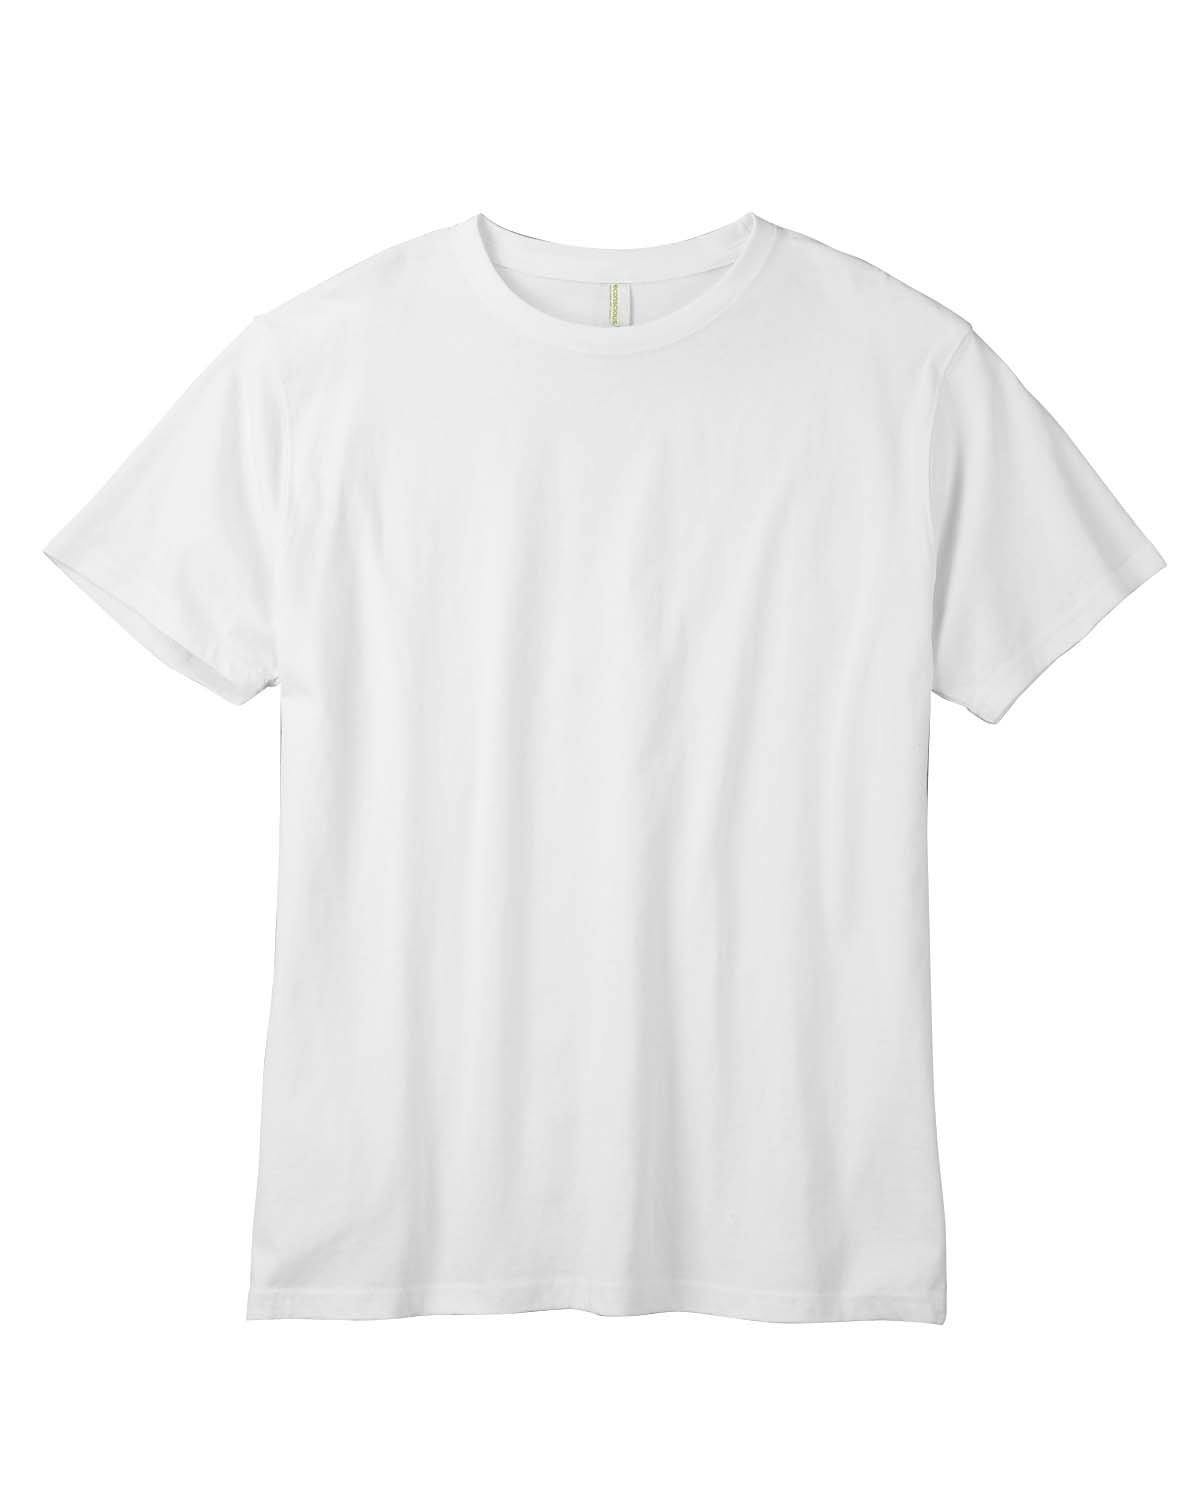 Image for Unisex Classic Short-Sleeve T-Shirt